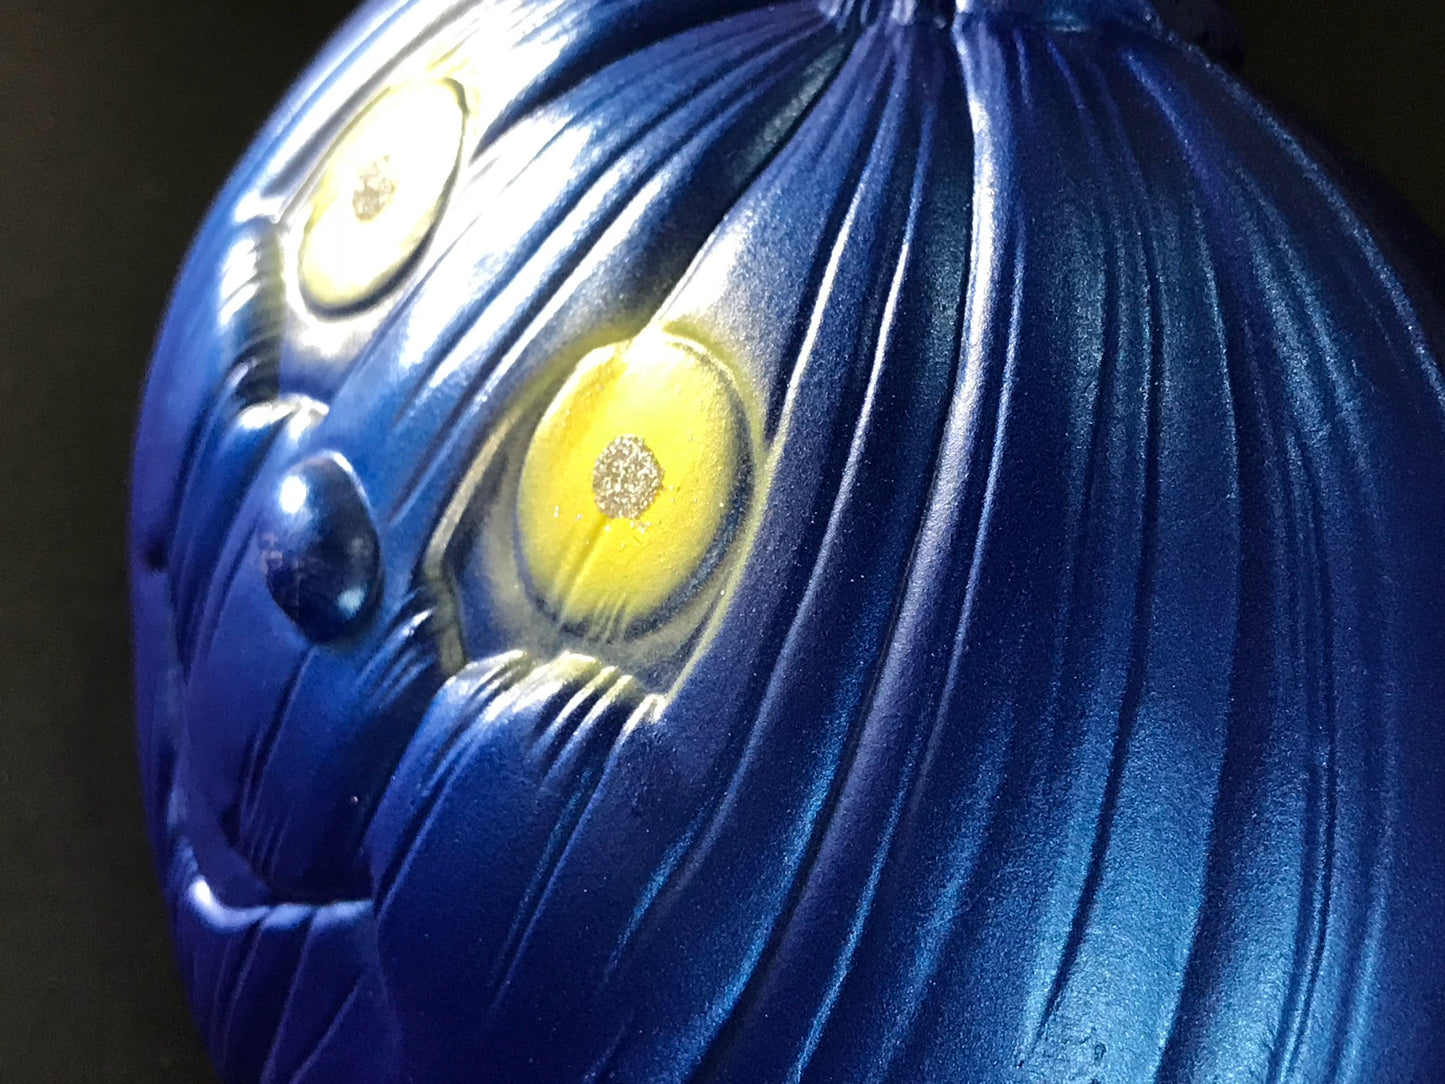 Traditional Jack O Lantern: Blue